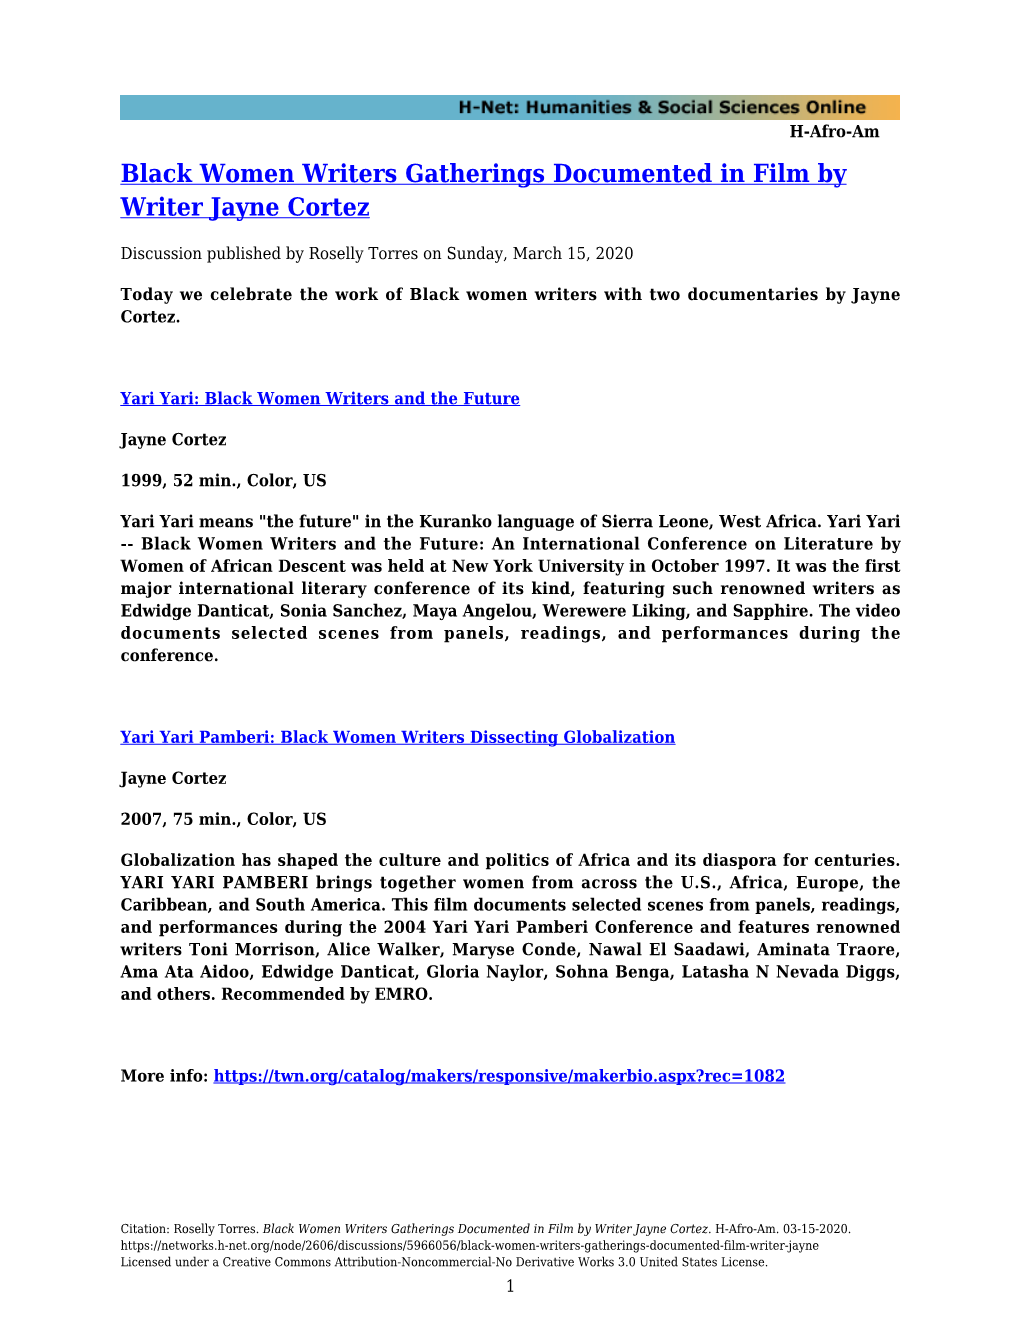 Black Women Writers Gatherings Documented in Film by Writer Jayne Cortez